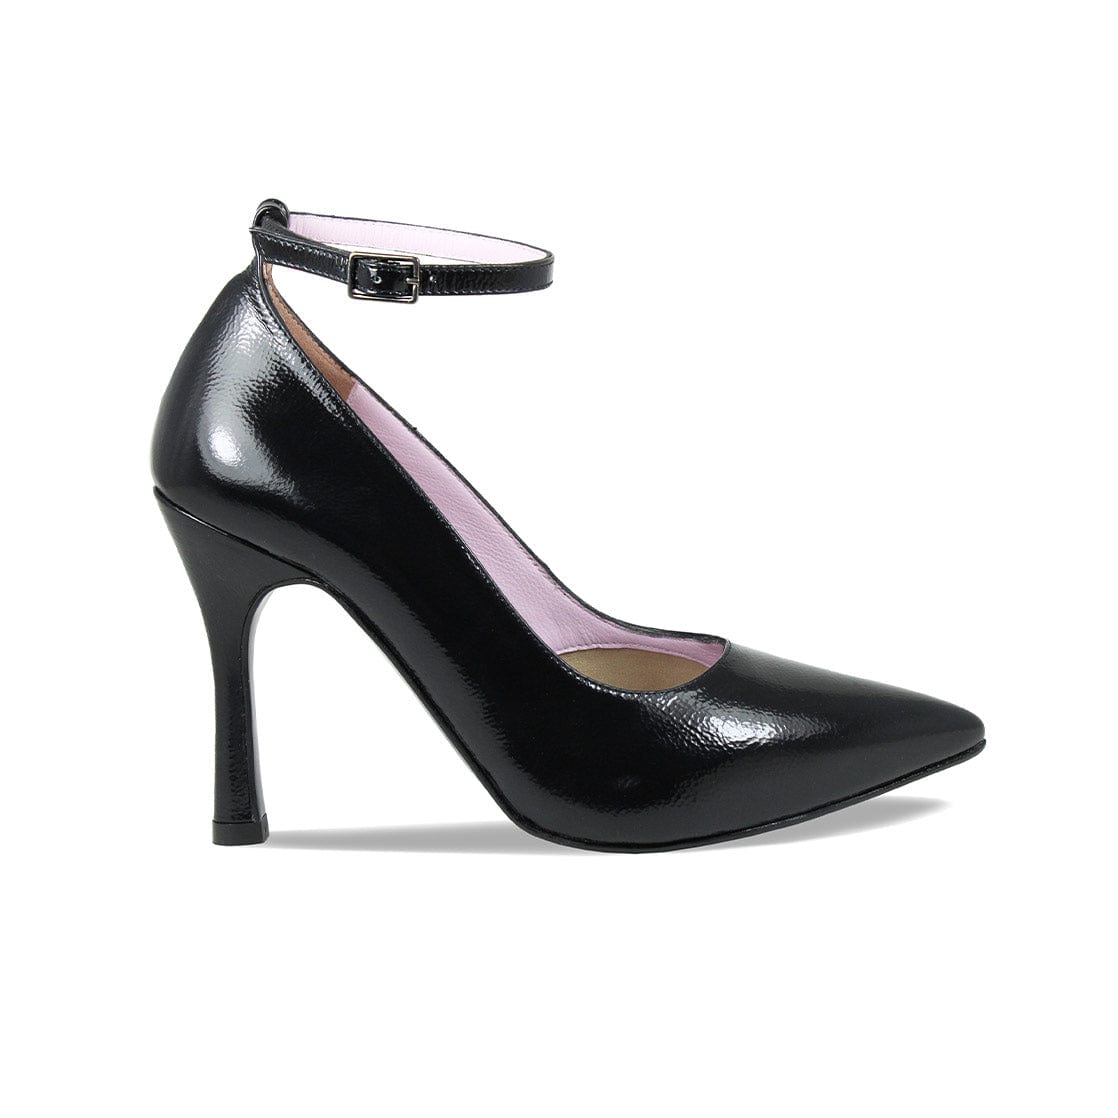 ASOS DESIGN Penza pointed high heeled pumps in black patent | ASOS